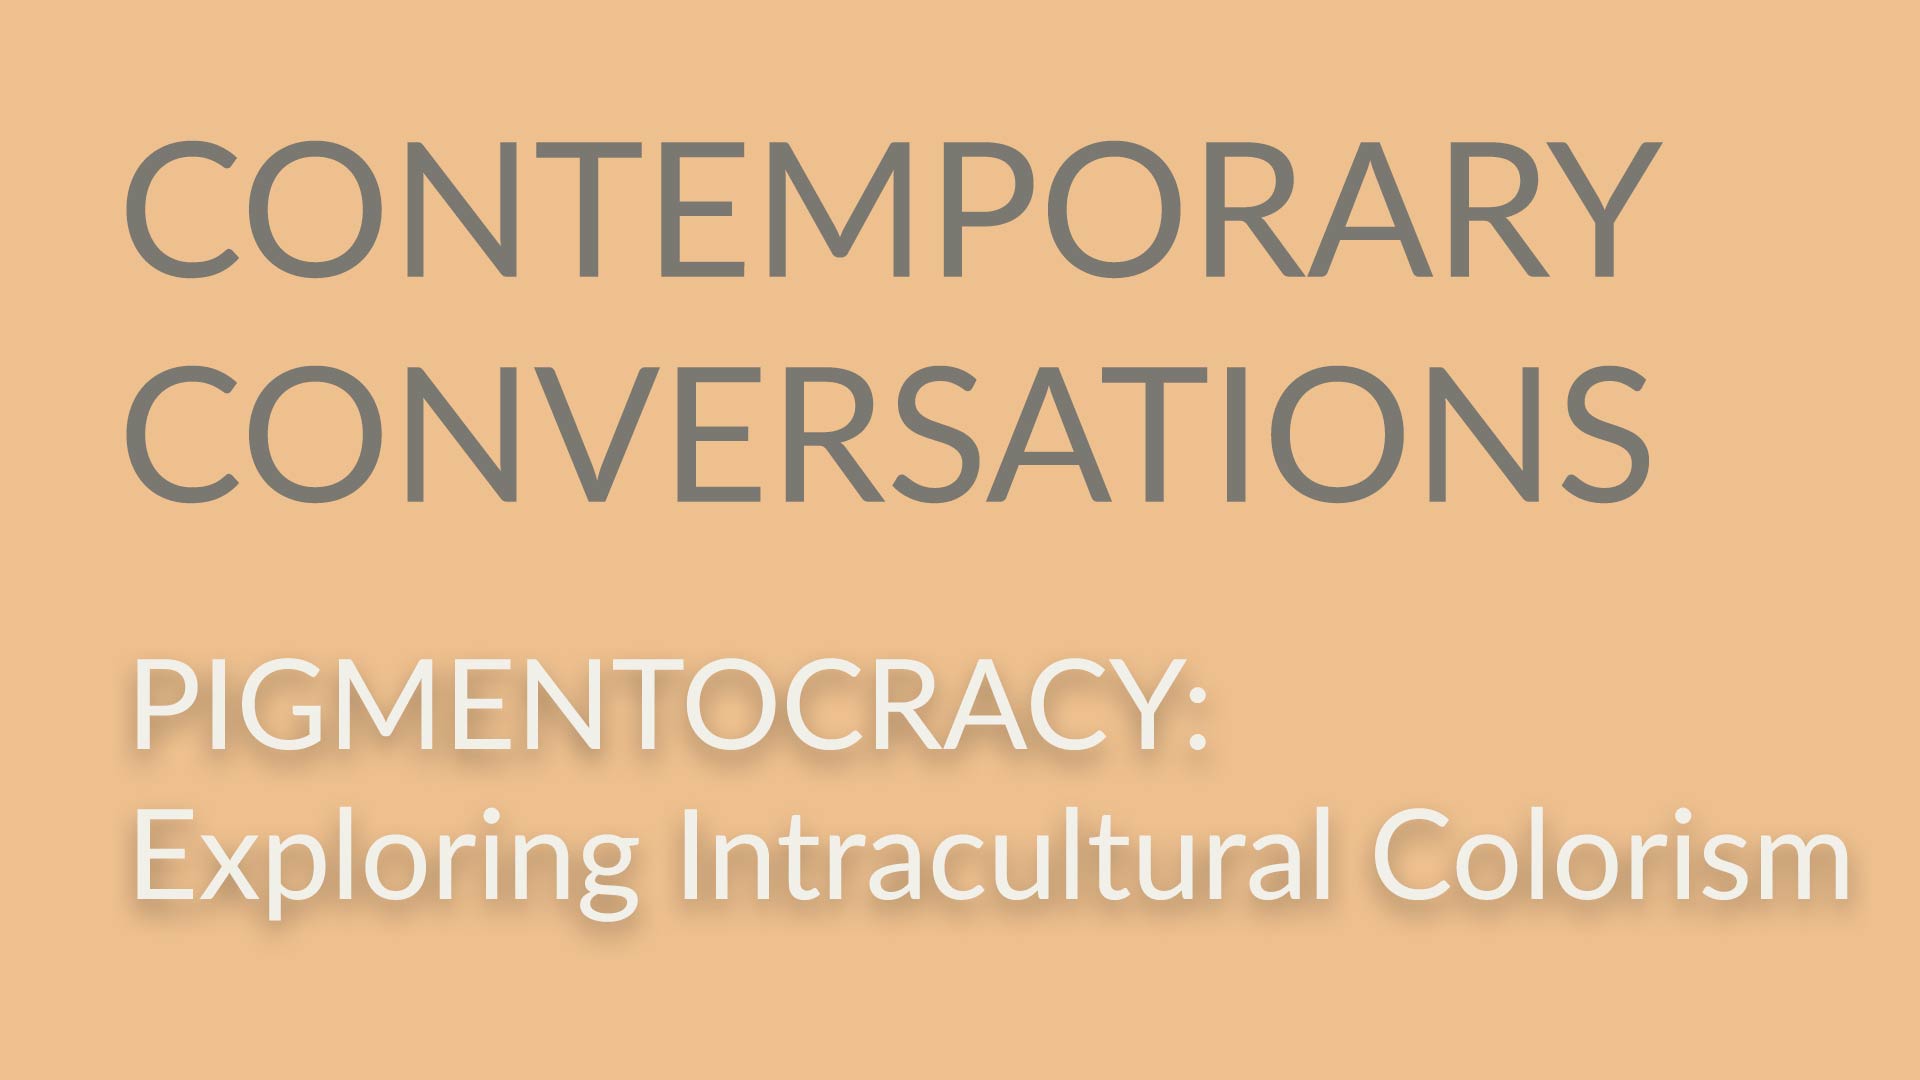 Contemporary Conversations Pigmentocracy: Exploring Intracultural Colorism text on light orange background